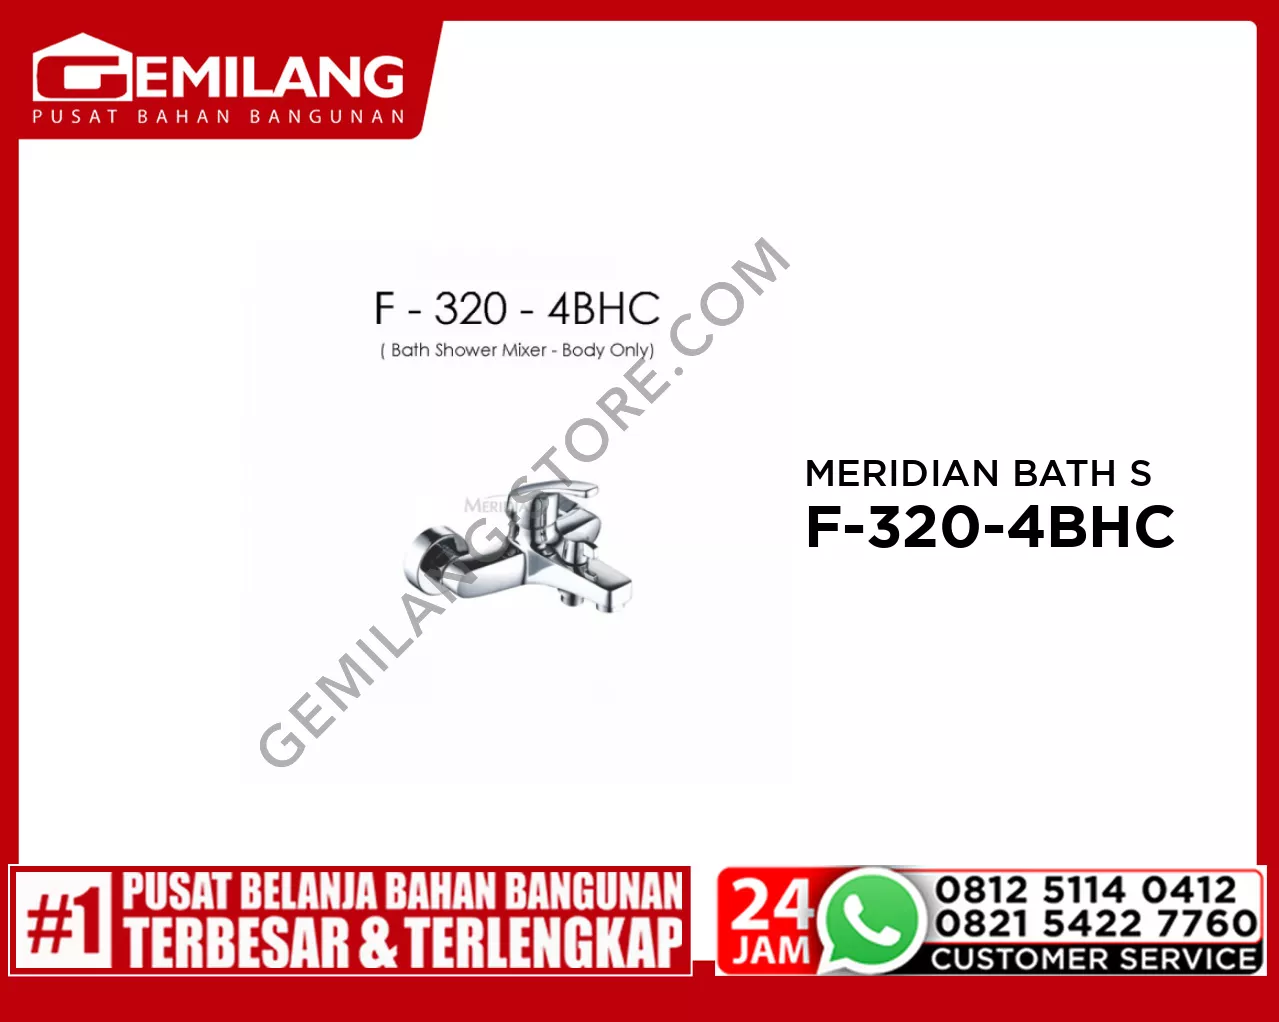 MERIDIAN BATH SHOWER (BODY ONLY) F-320-4BHC